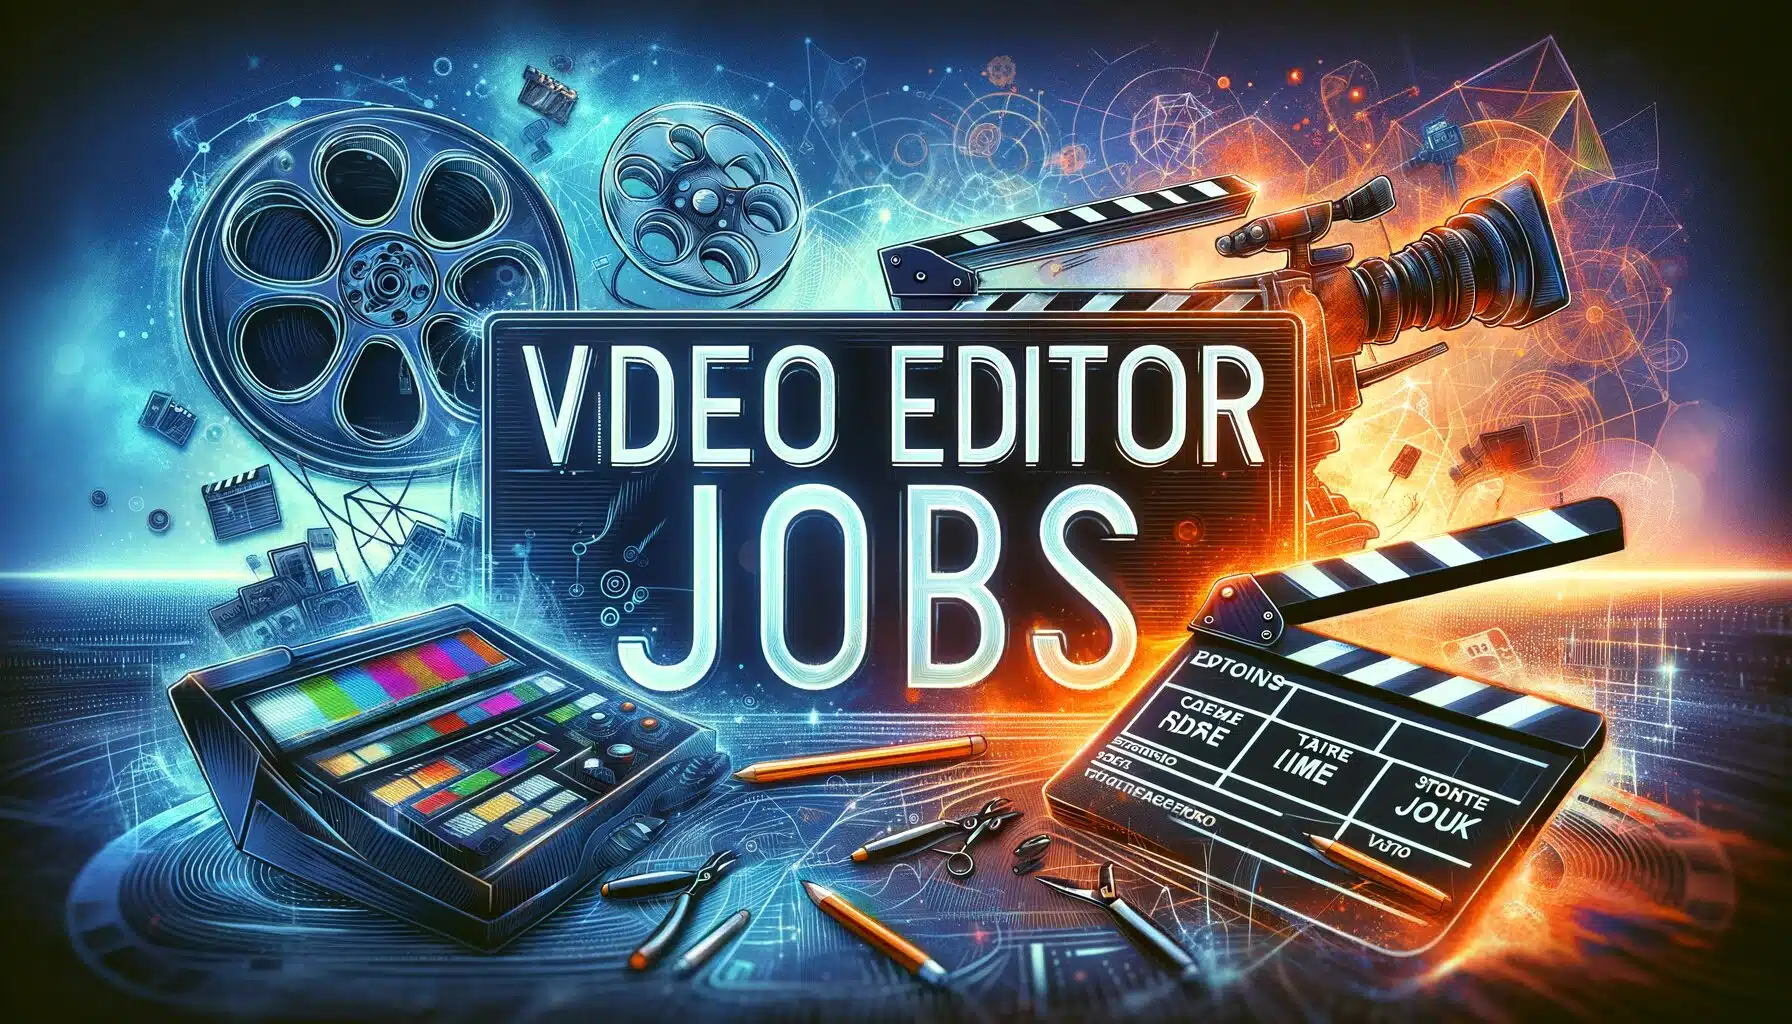 video editor jobs